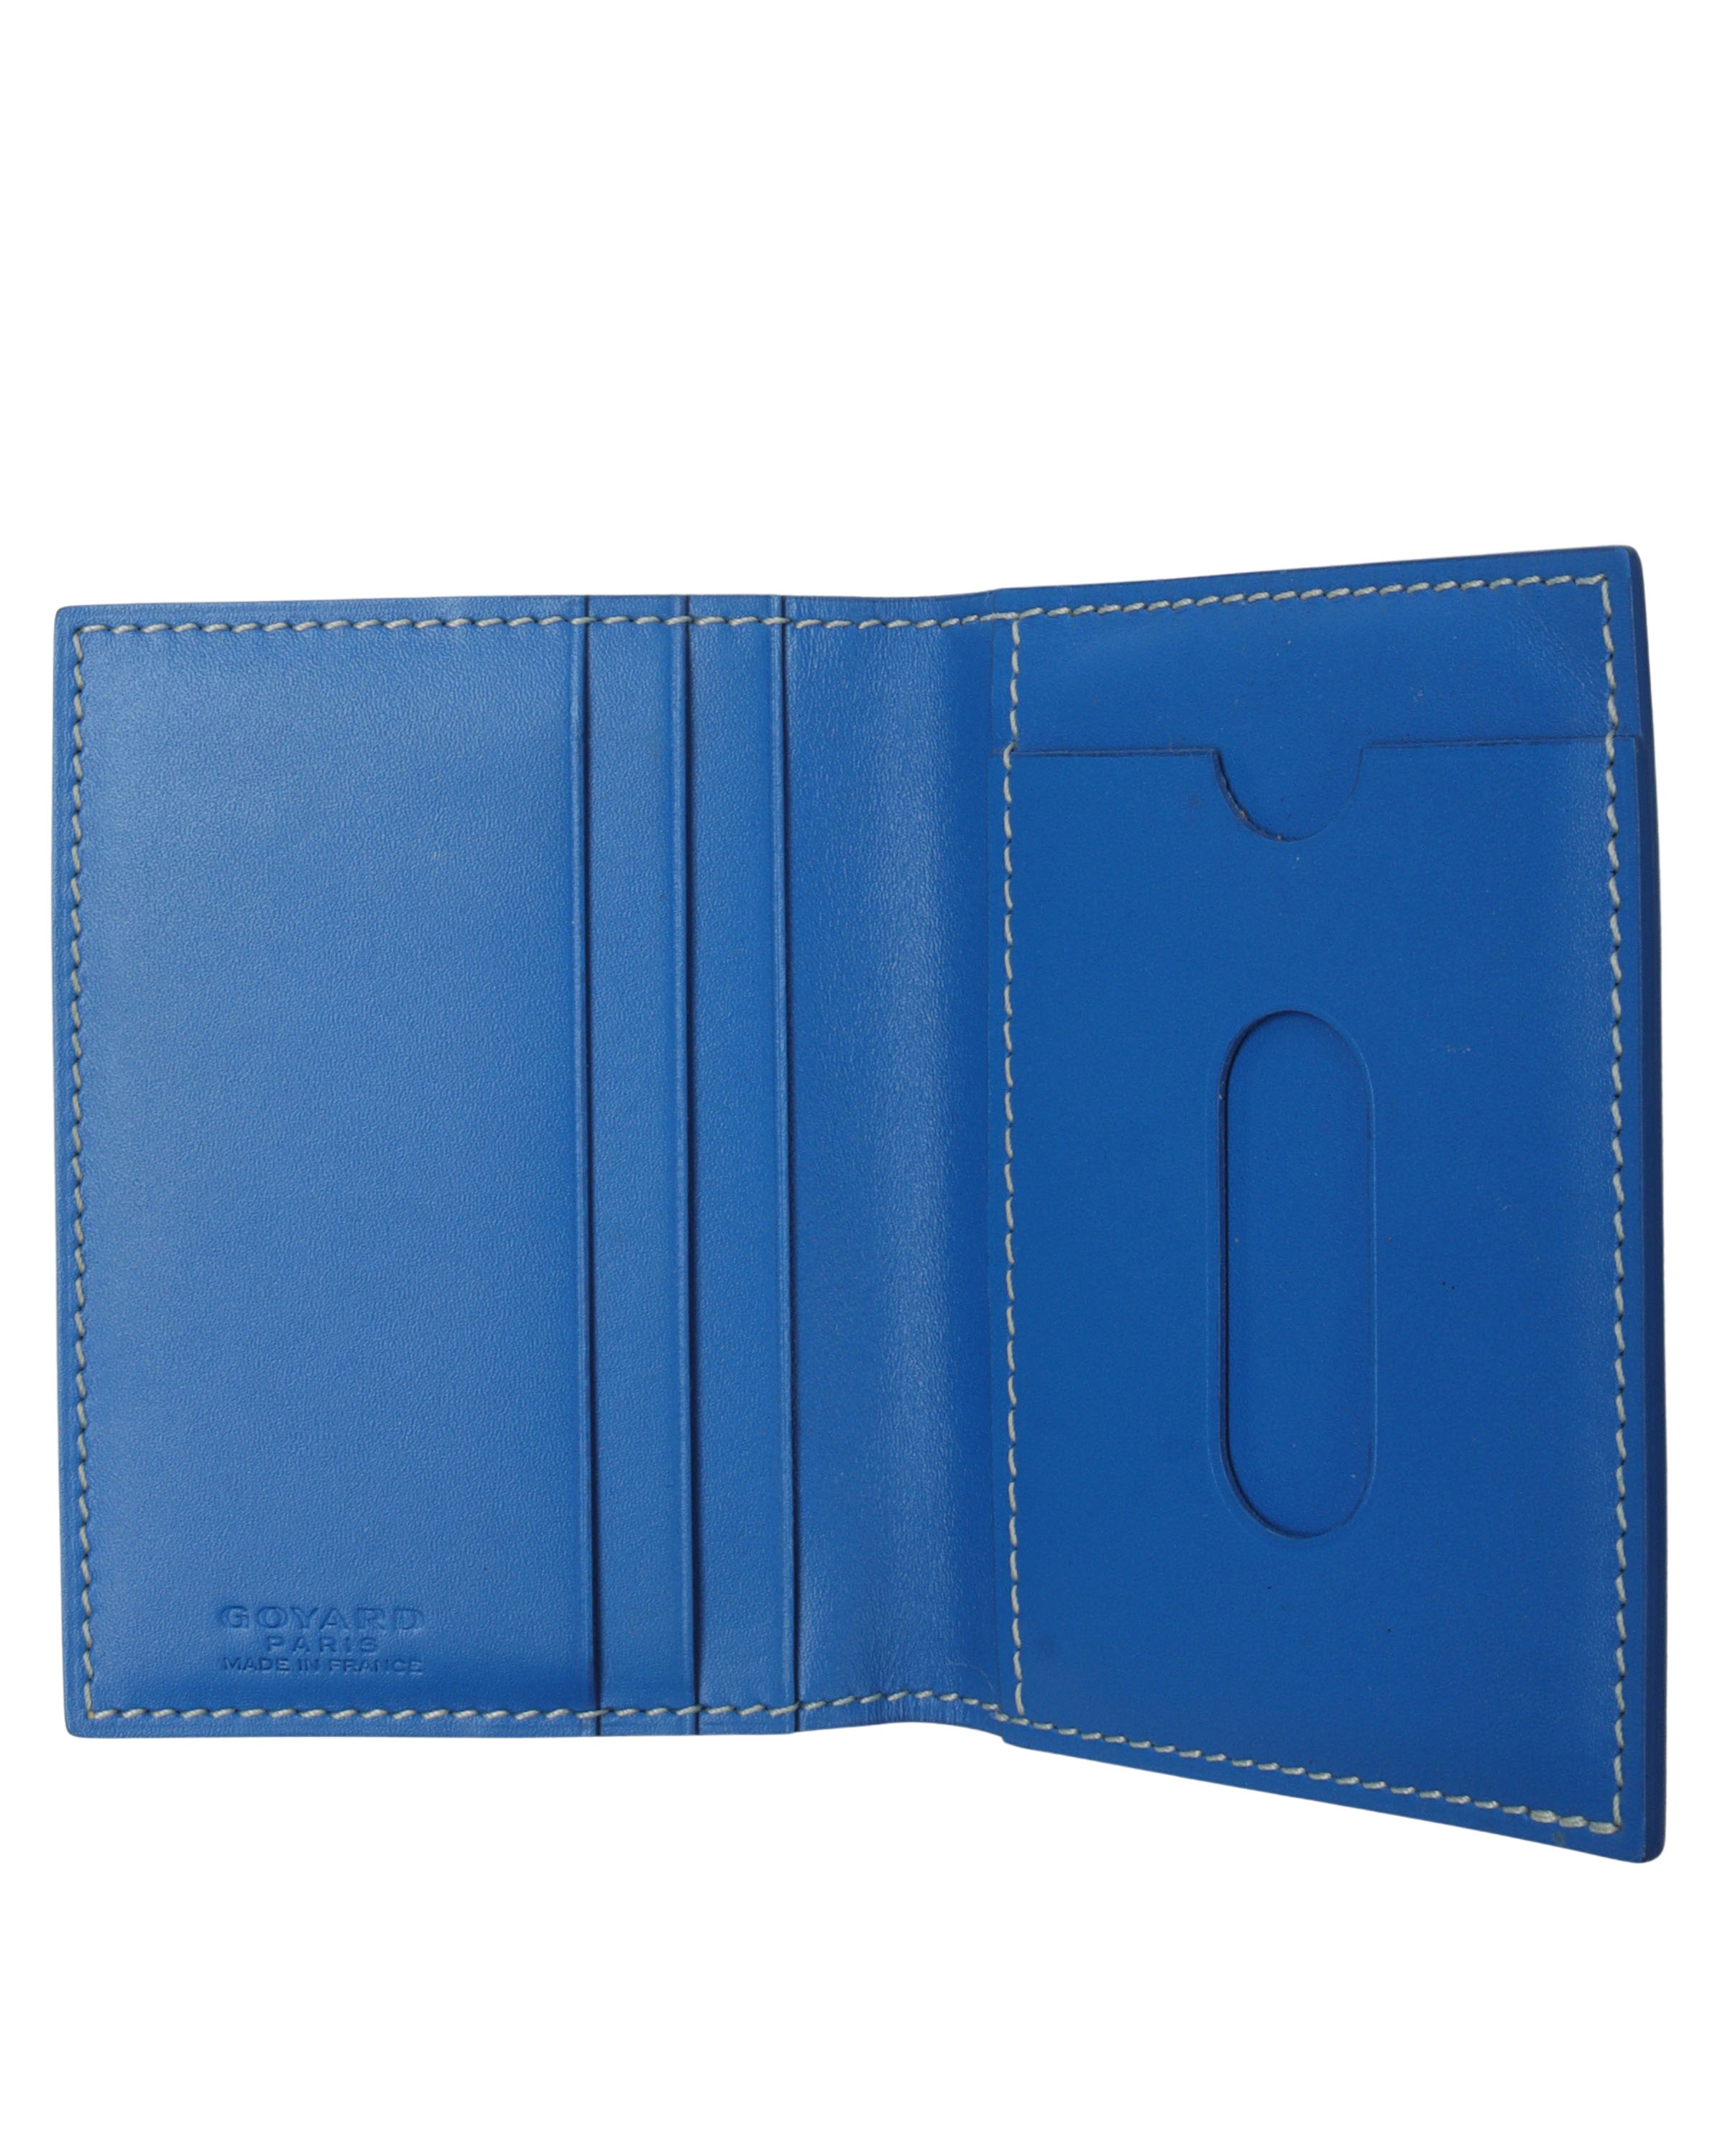 Goyard Saint-Pierre Card Wallet, Navy Blue